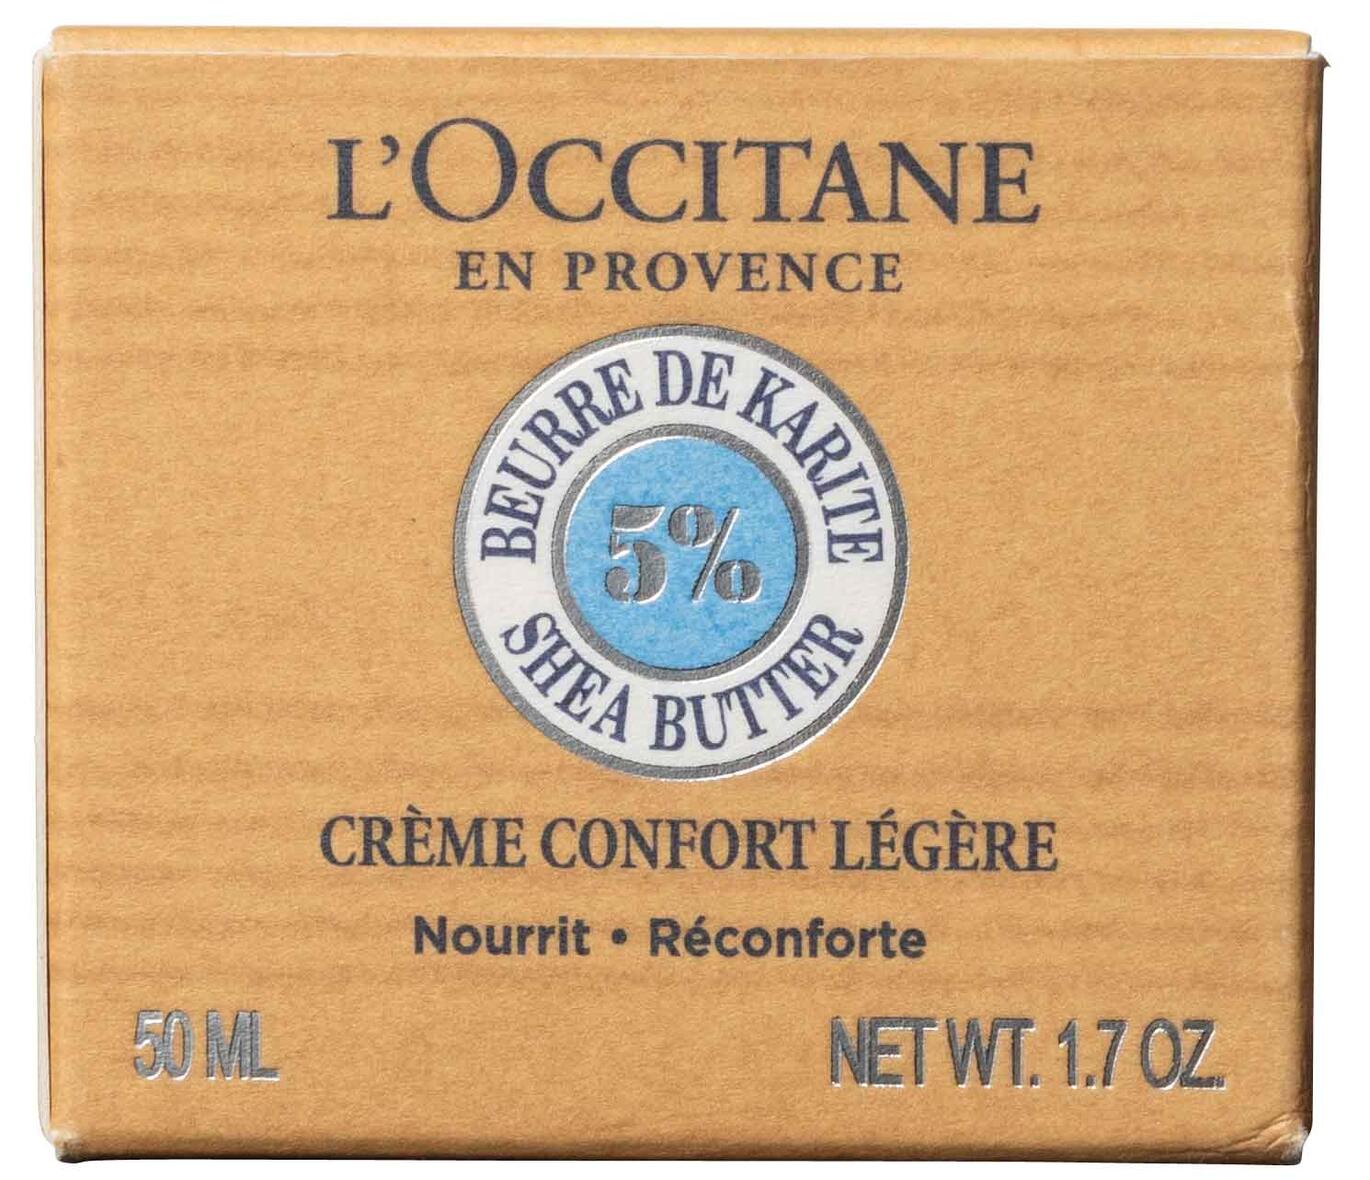 Light comforting cream 5% shea butter L’Occitane